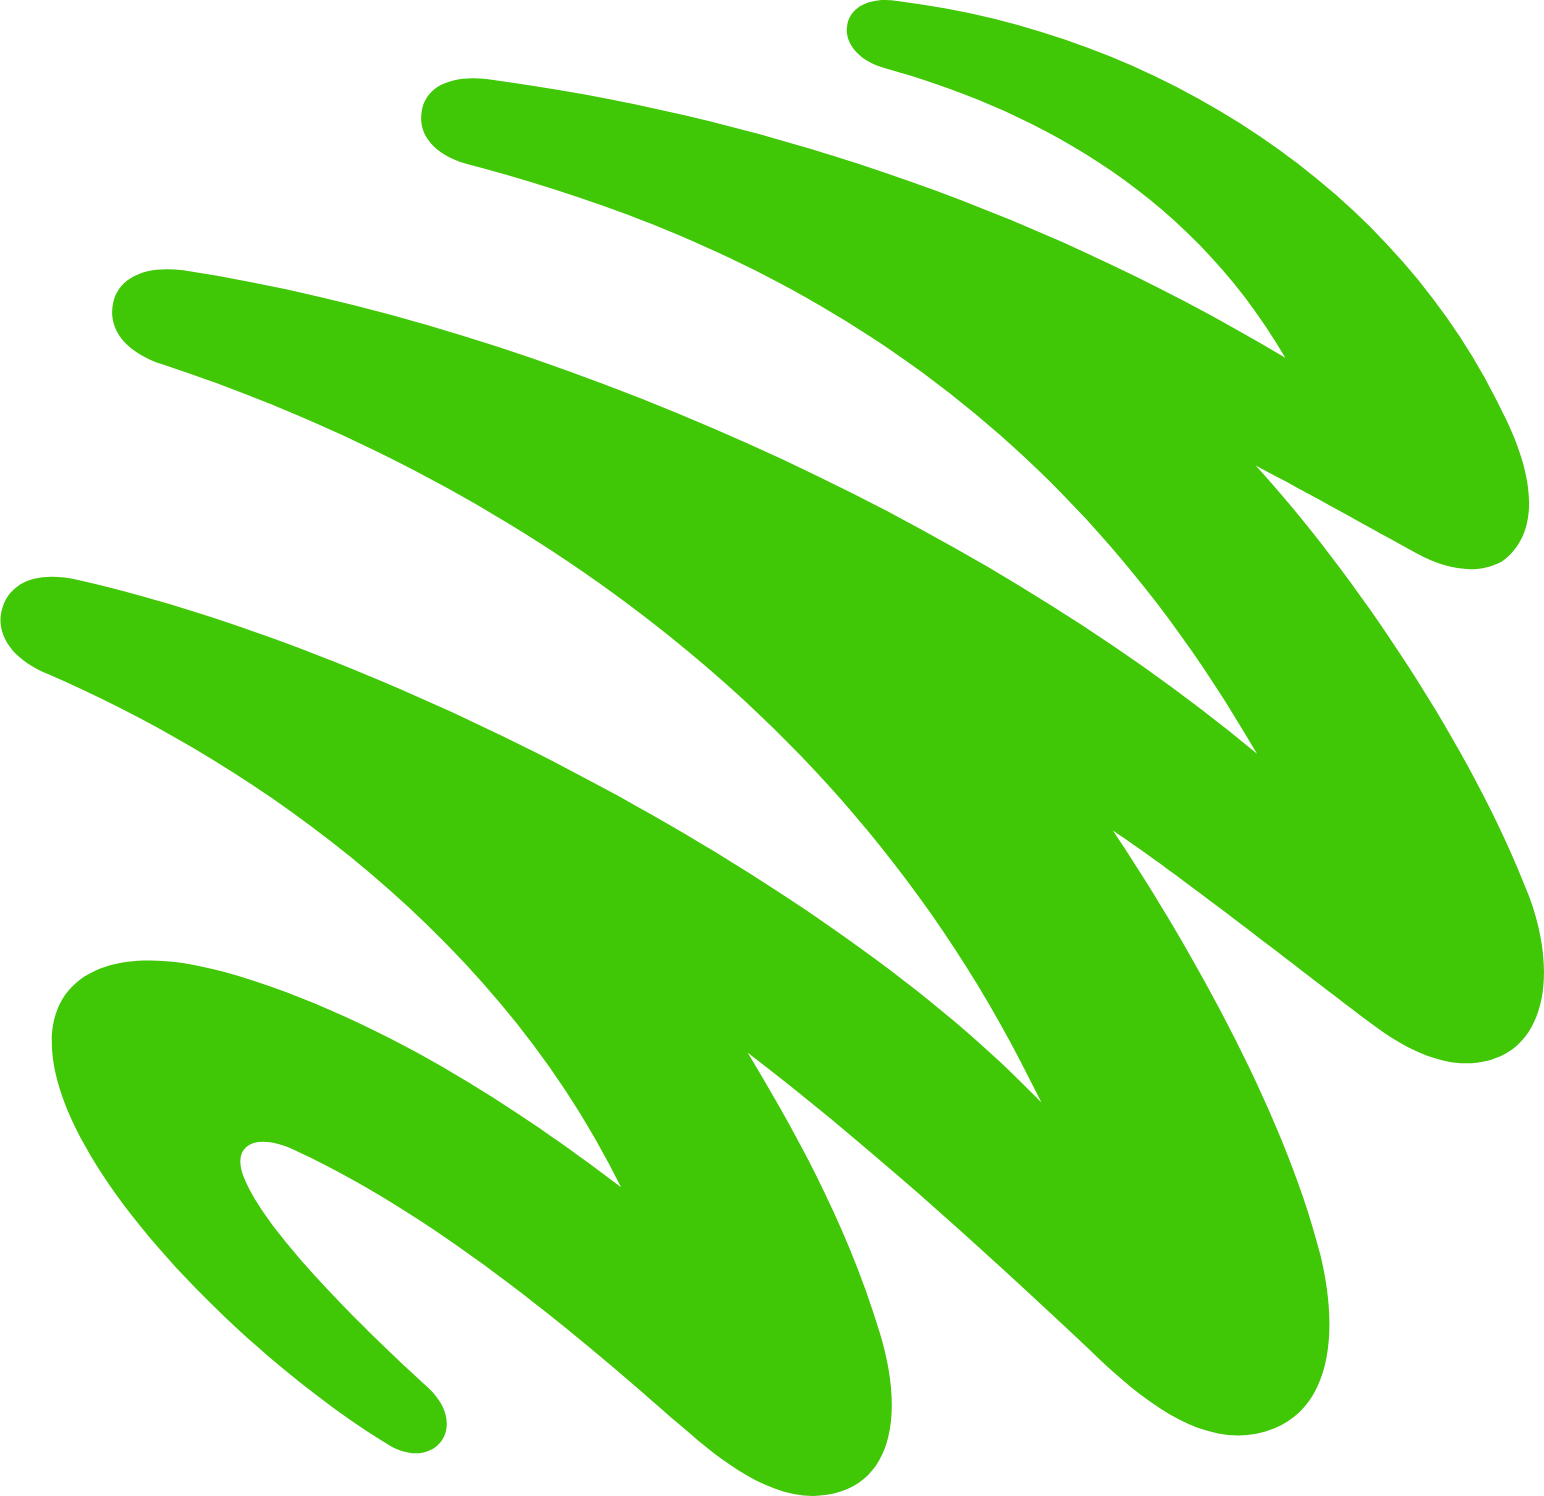 Maxis Berhad logo (PNG transparent)